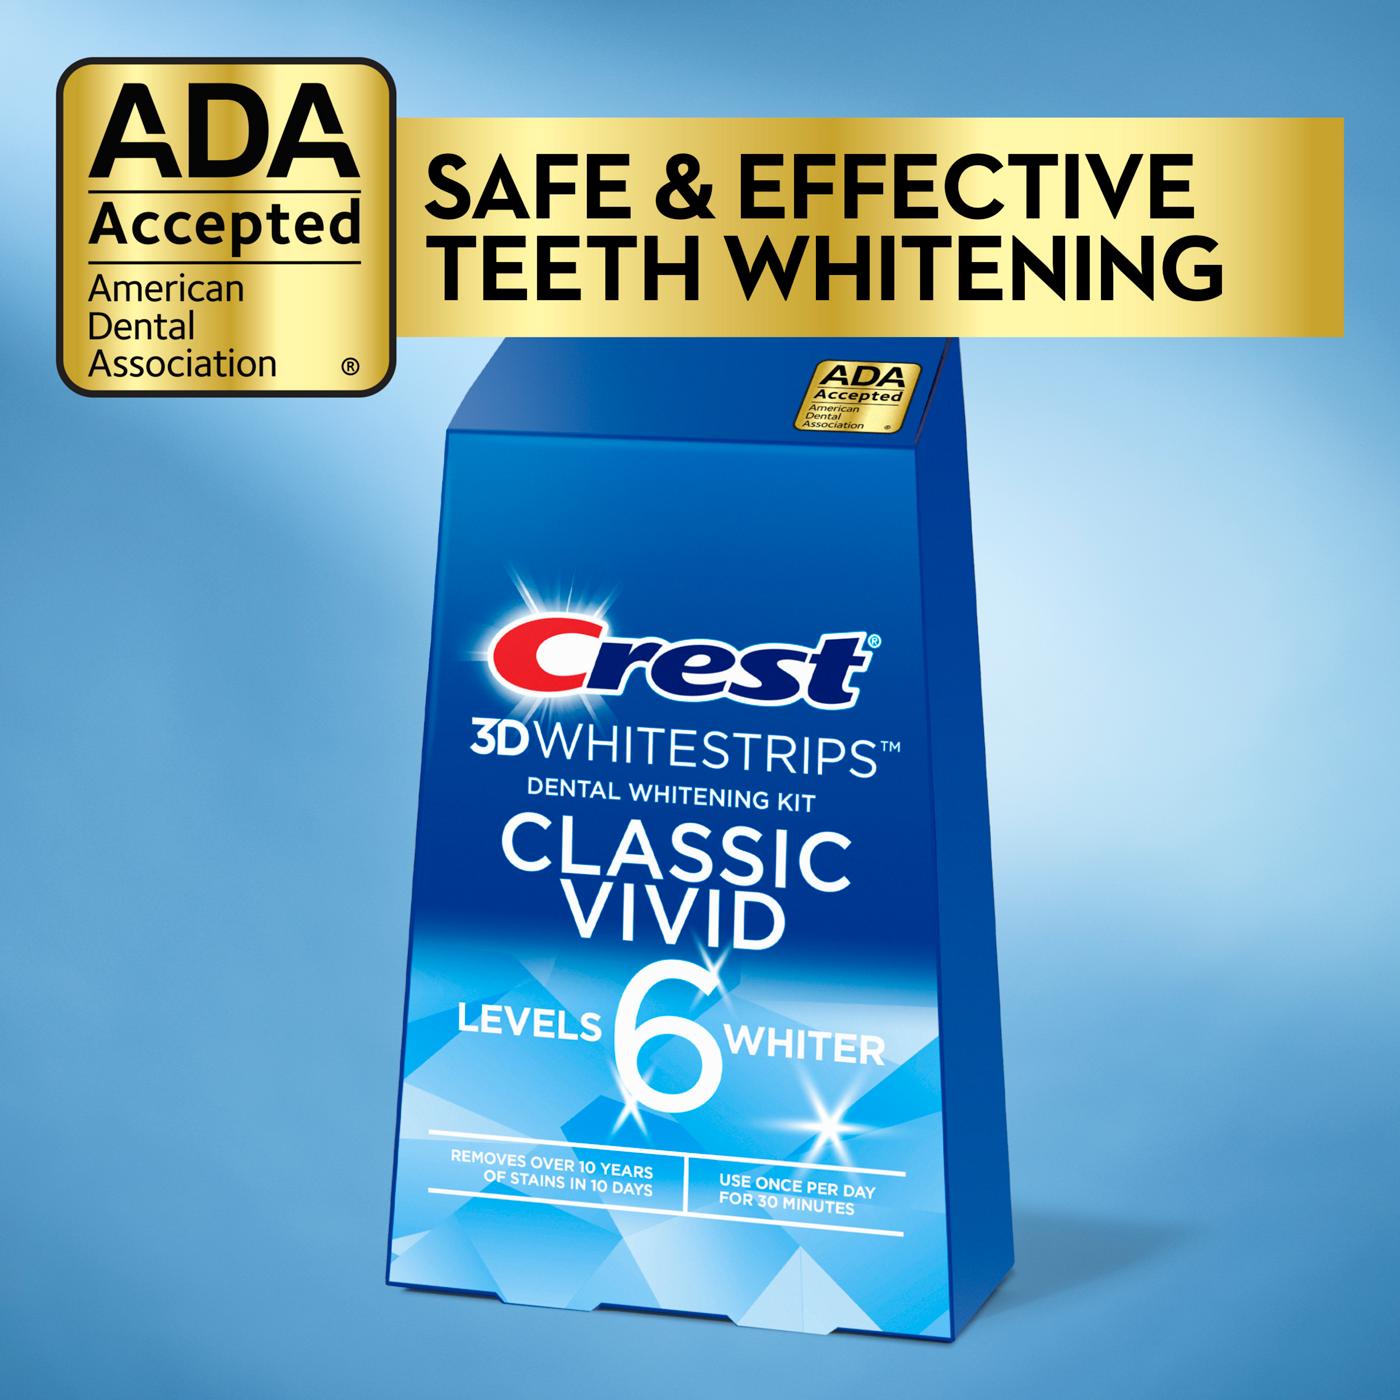 Crest 3DWhitestrips Dental Whitening Kit - Classic Vivid; image 7 of 7